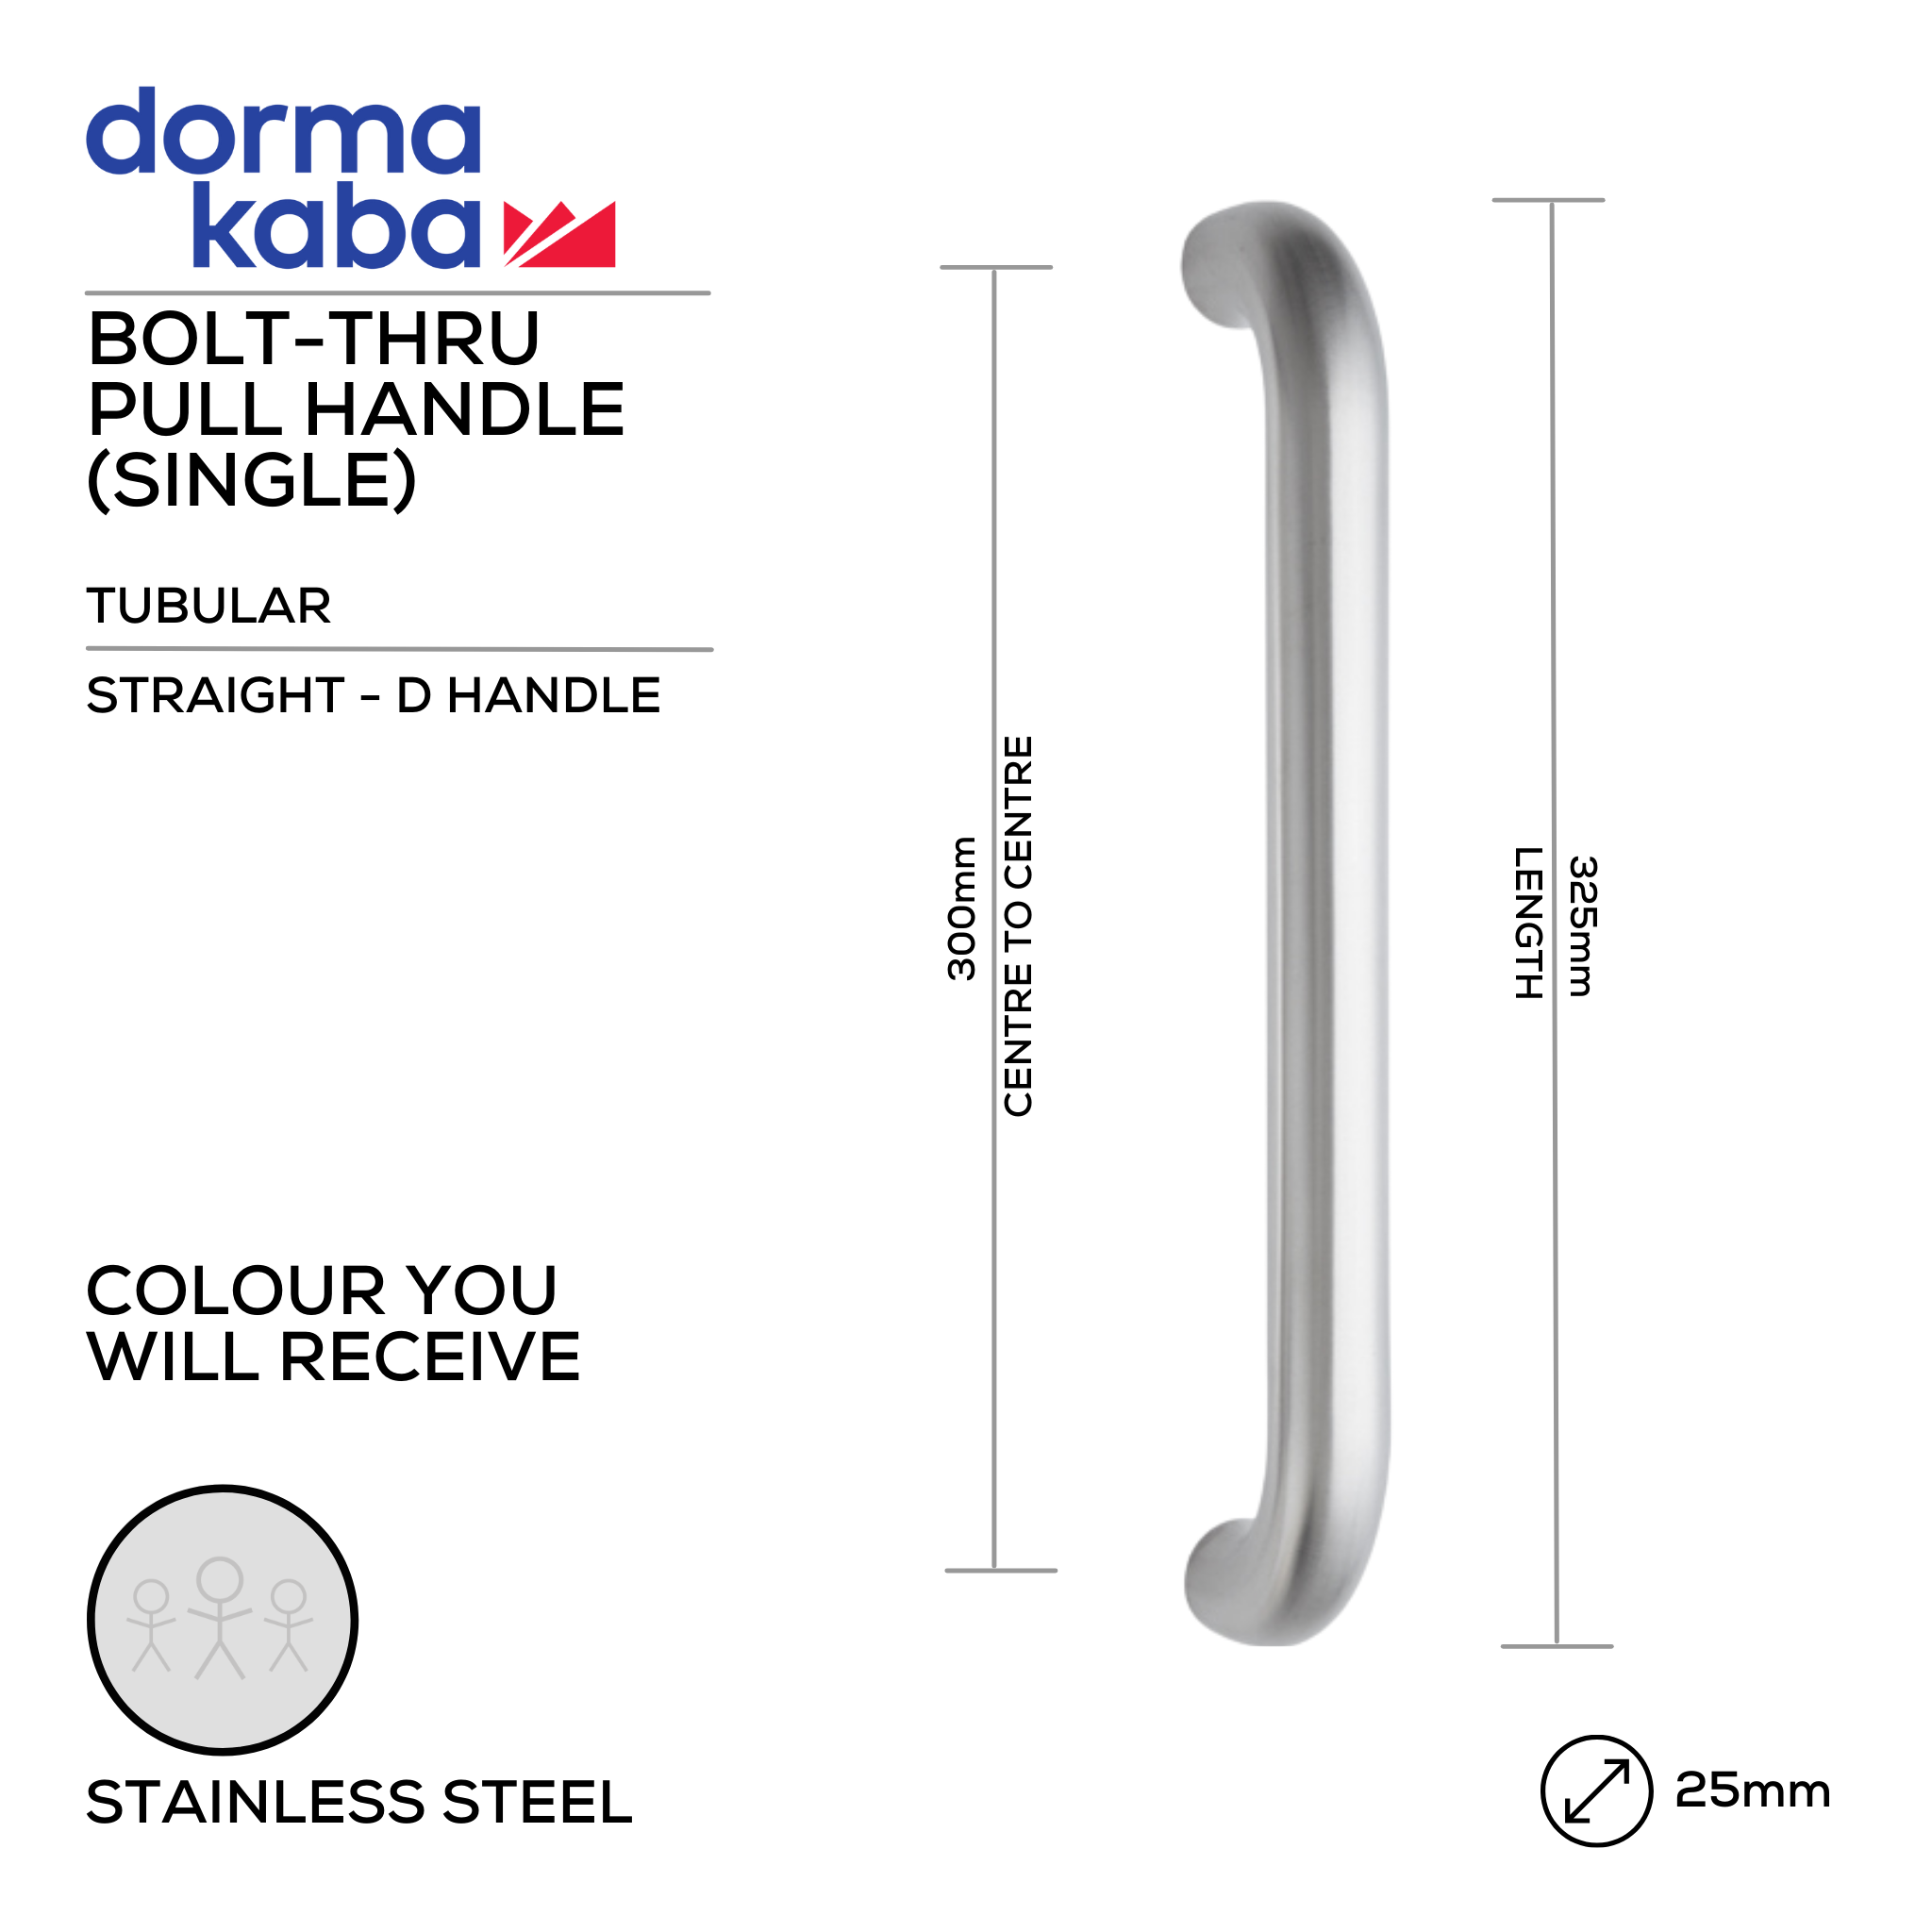 DPH 301A BT, Pull Handle, Tubular, Straight, D Handle, BoltThru, 25mm (Ø) x 325mm (l) x 300mm (ctc), Stainless Steel, DORMAKABA